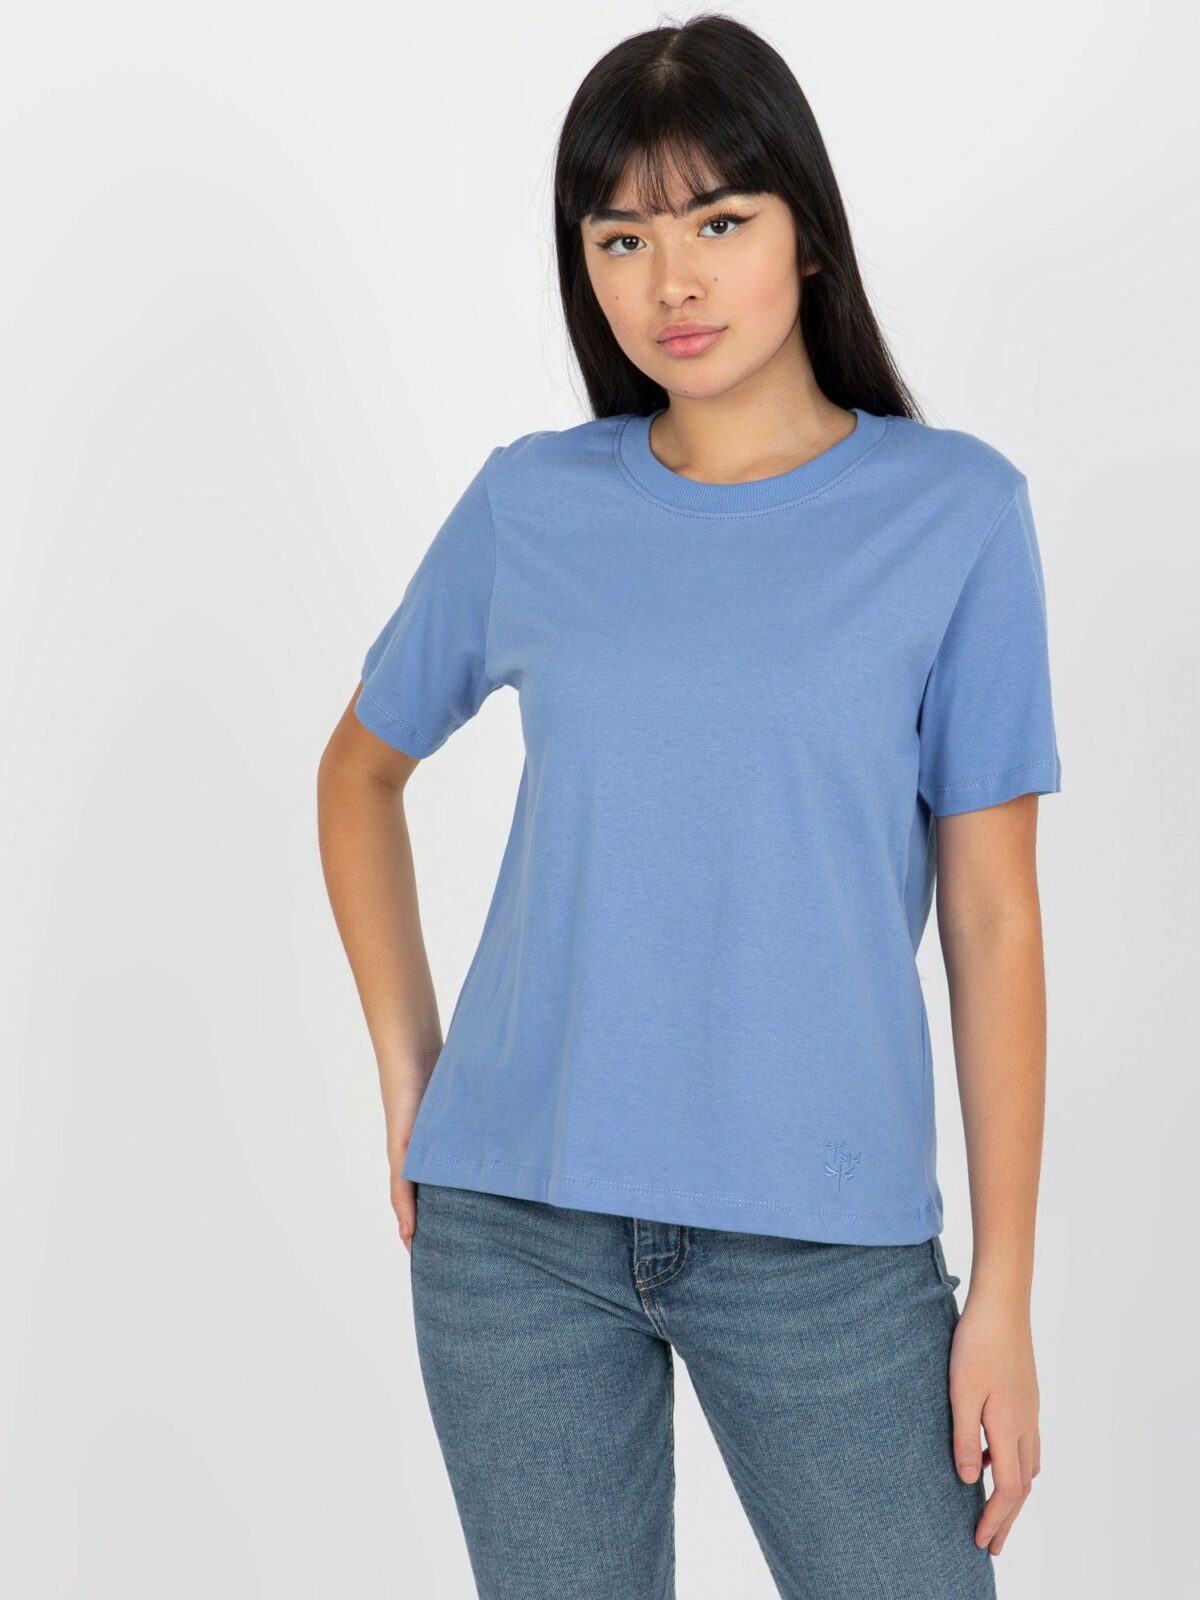 Tmavě modré klasické jednobarevné tričko